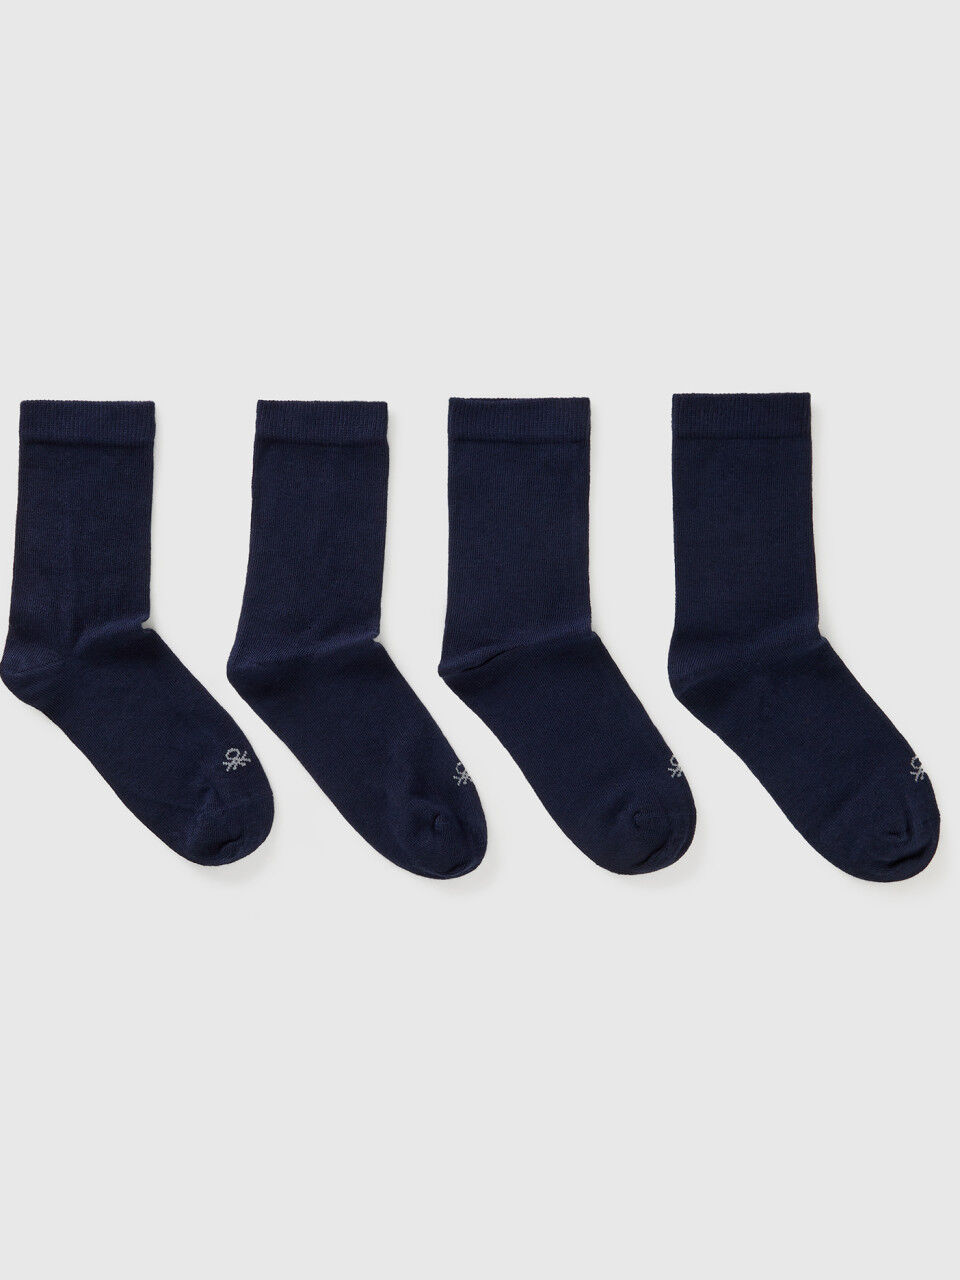 Vier Paar Socken in Dunkelblau